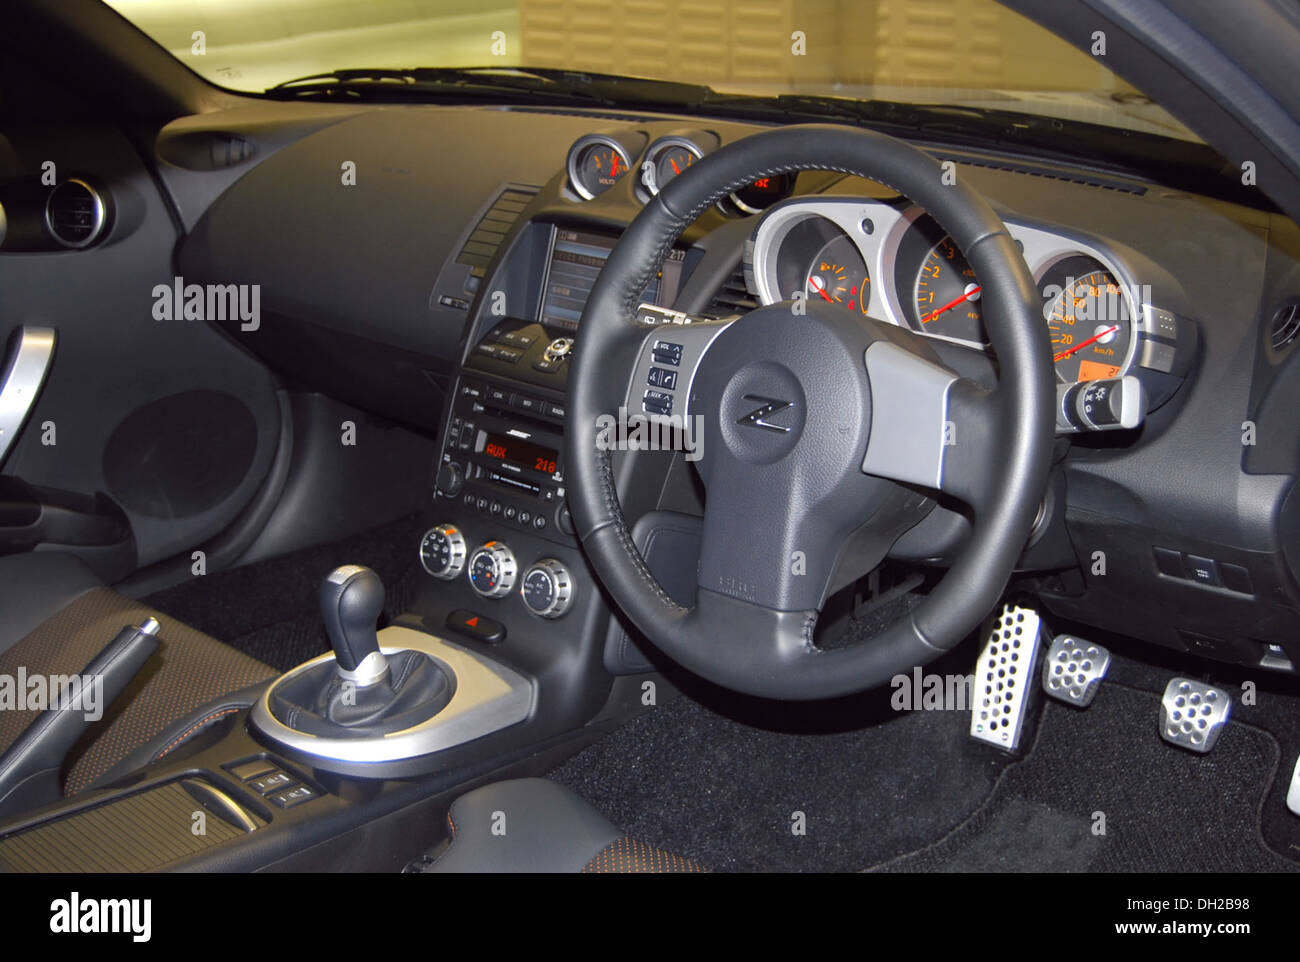 2008 Nissan Fairlady Z Interior Stockfoto Bild 62133044